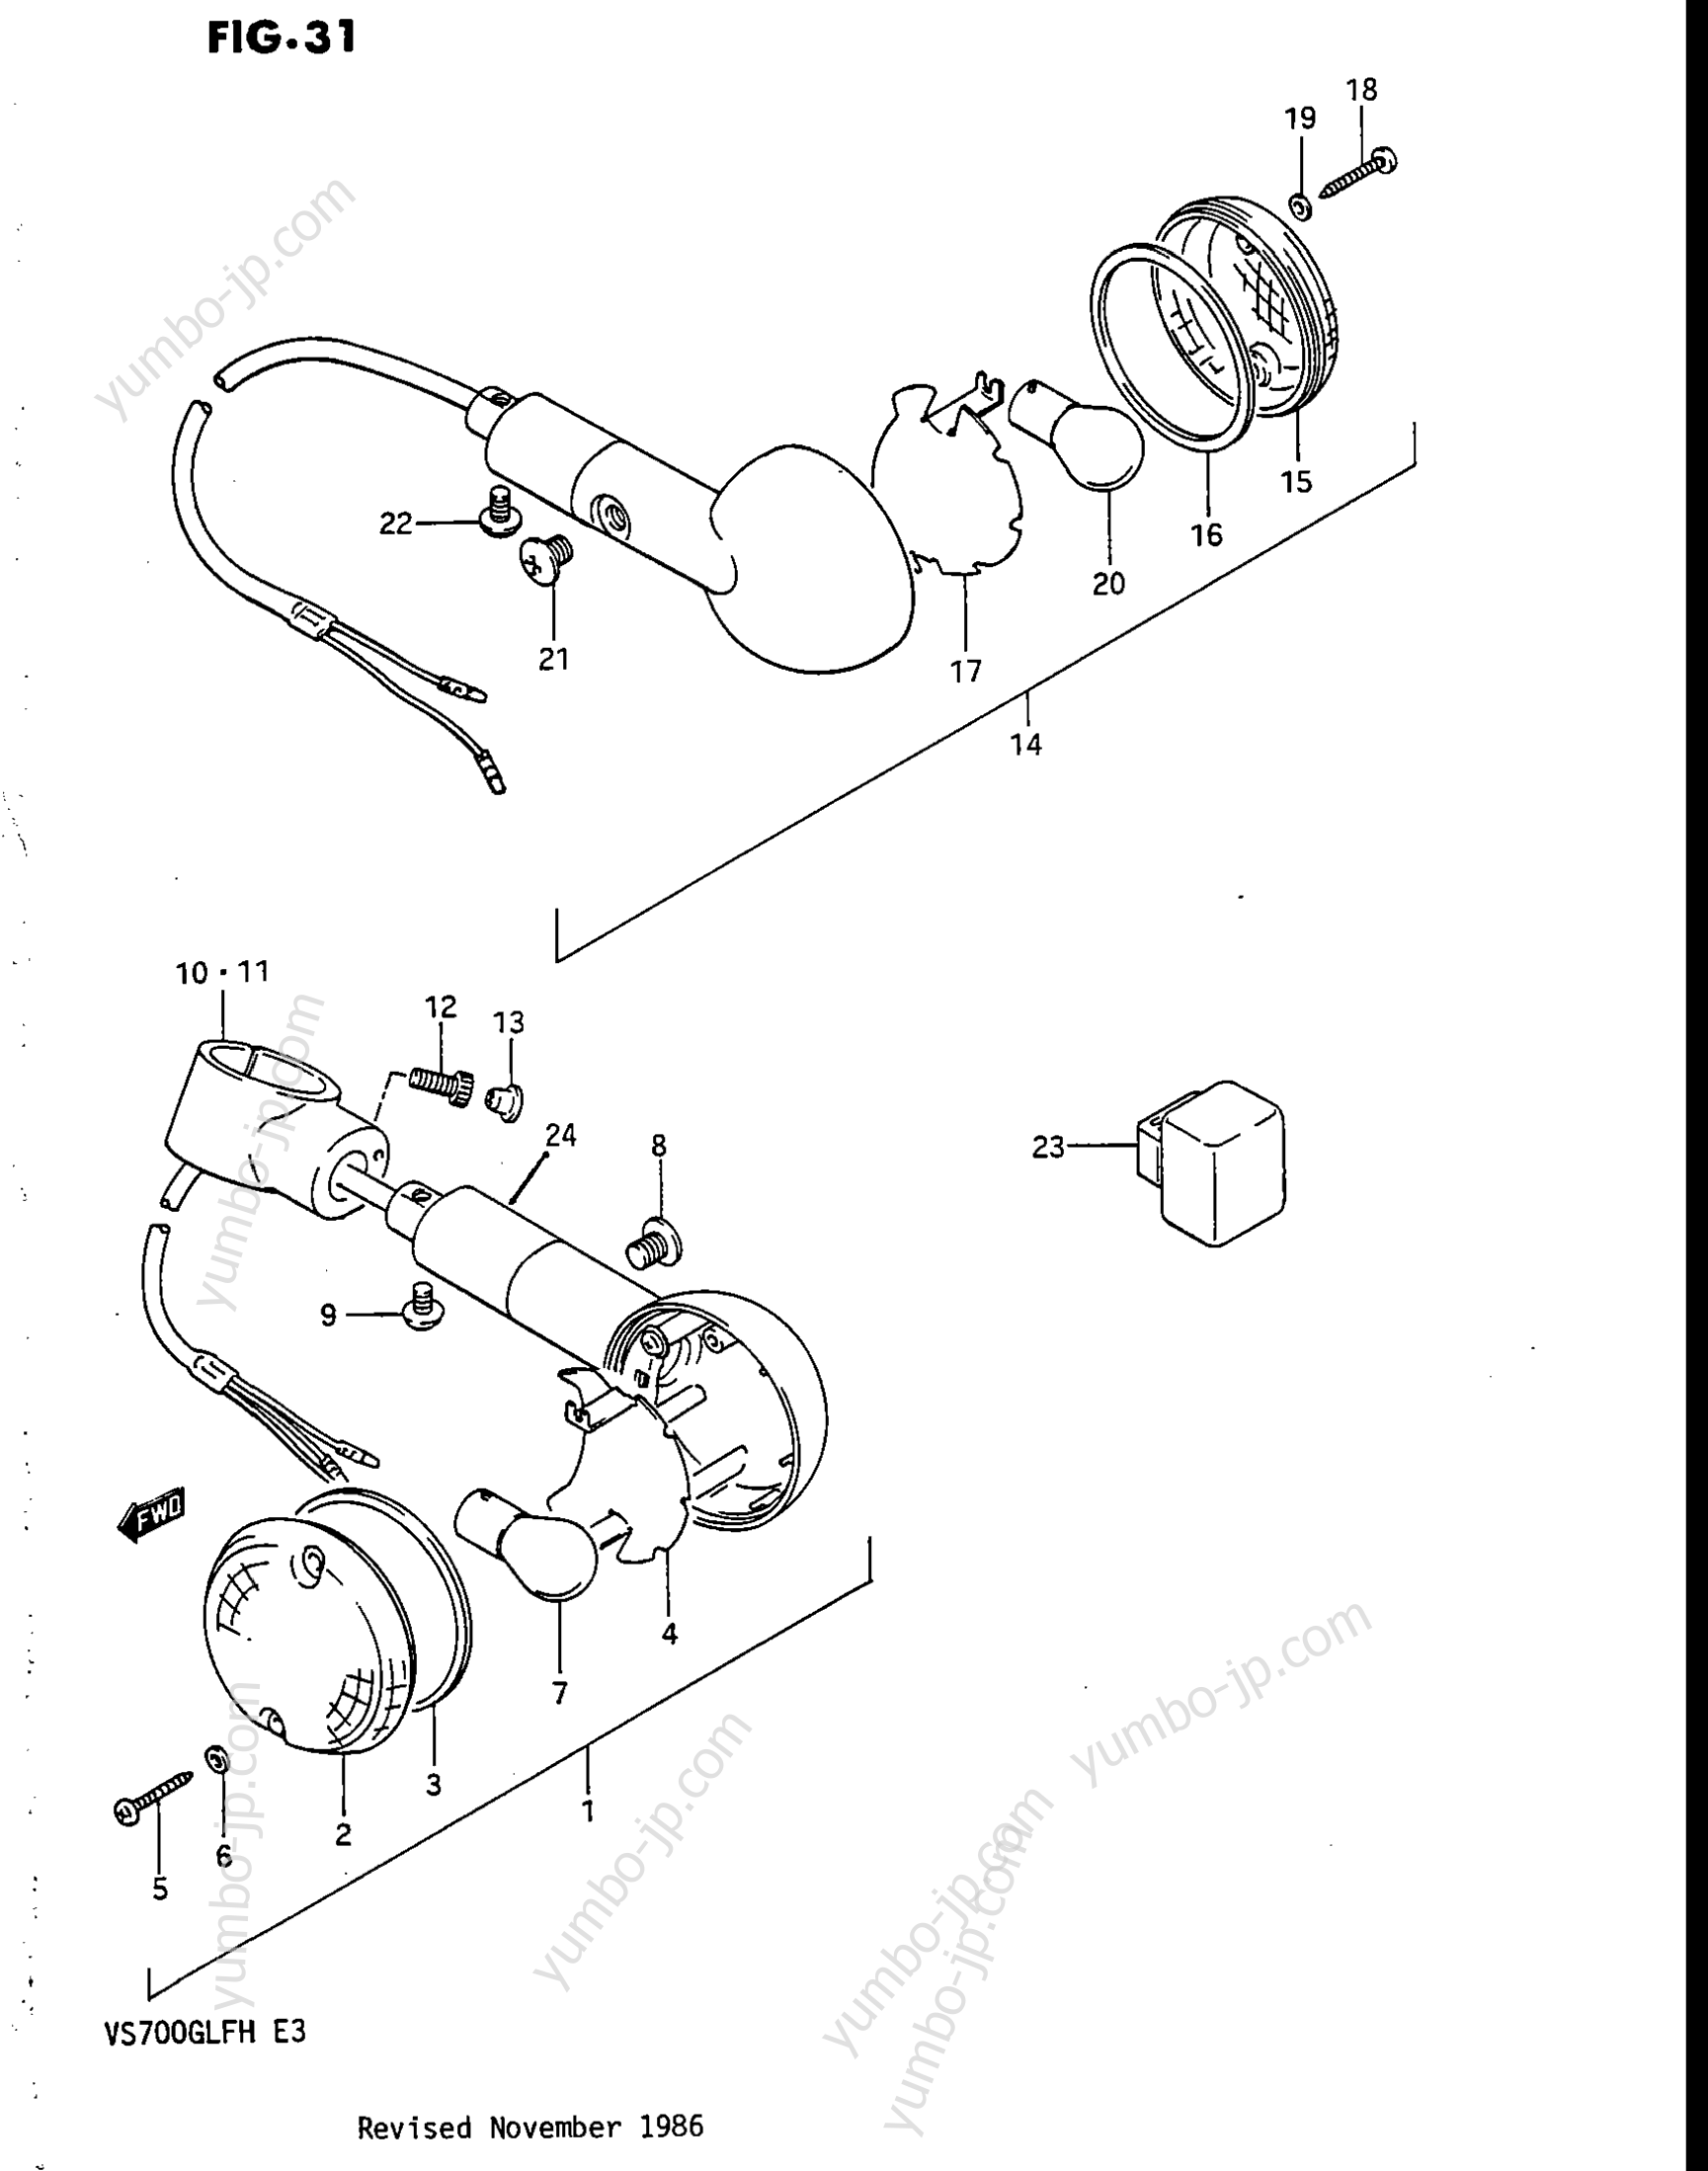 TURN SIGNAL LAMP for motorcycles SUZUKI Intruder (VS700GLP) 1986 year